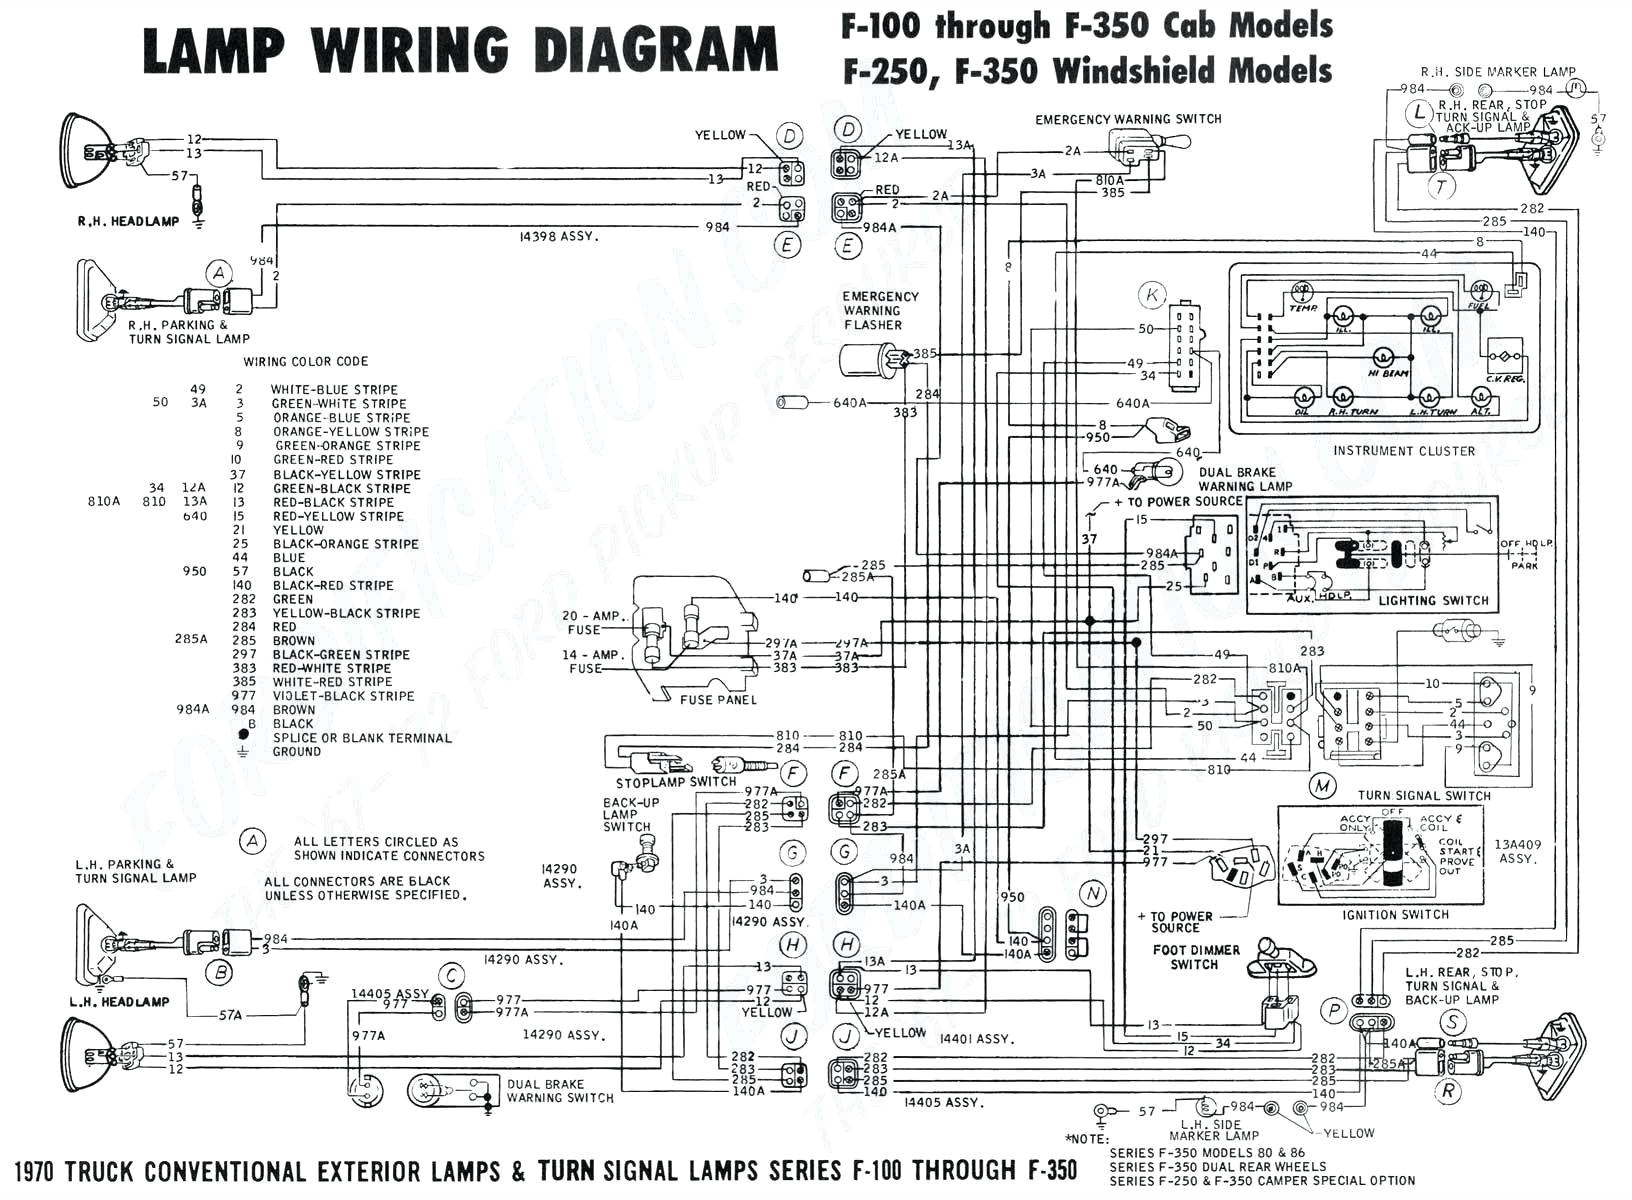 99 mazda 626 fuse box wiring library in 1997 acura cl 3 0 fuse box diagram jpg